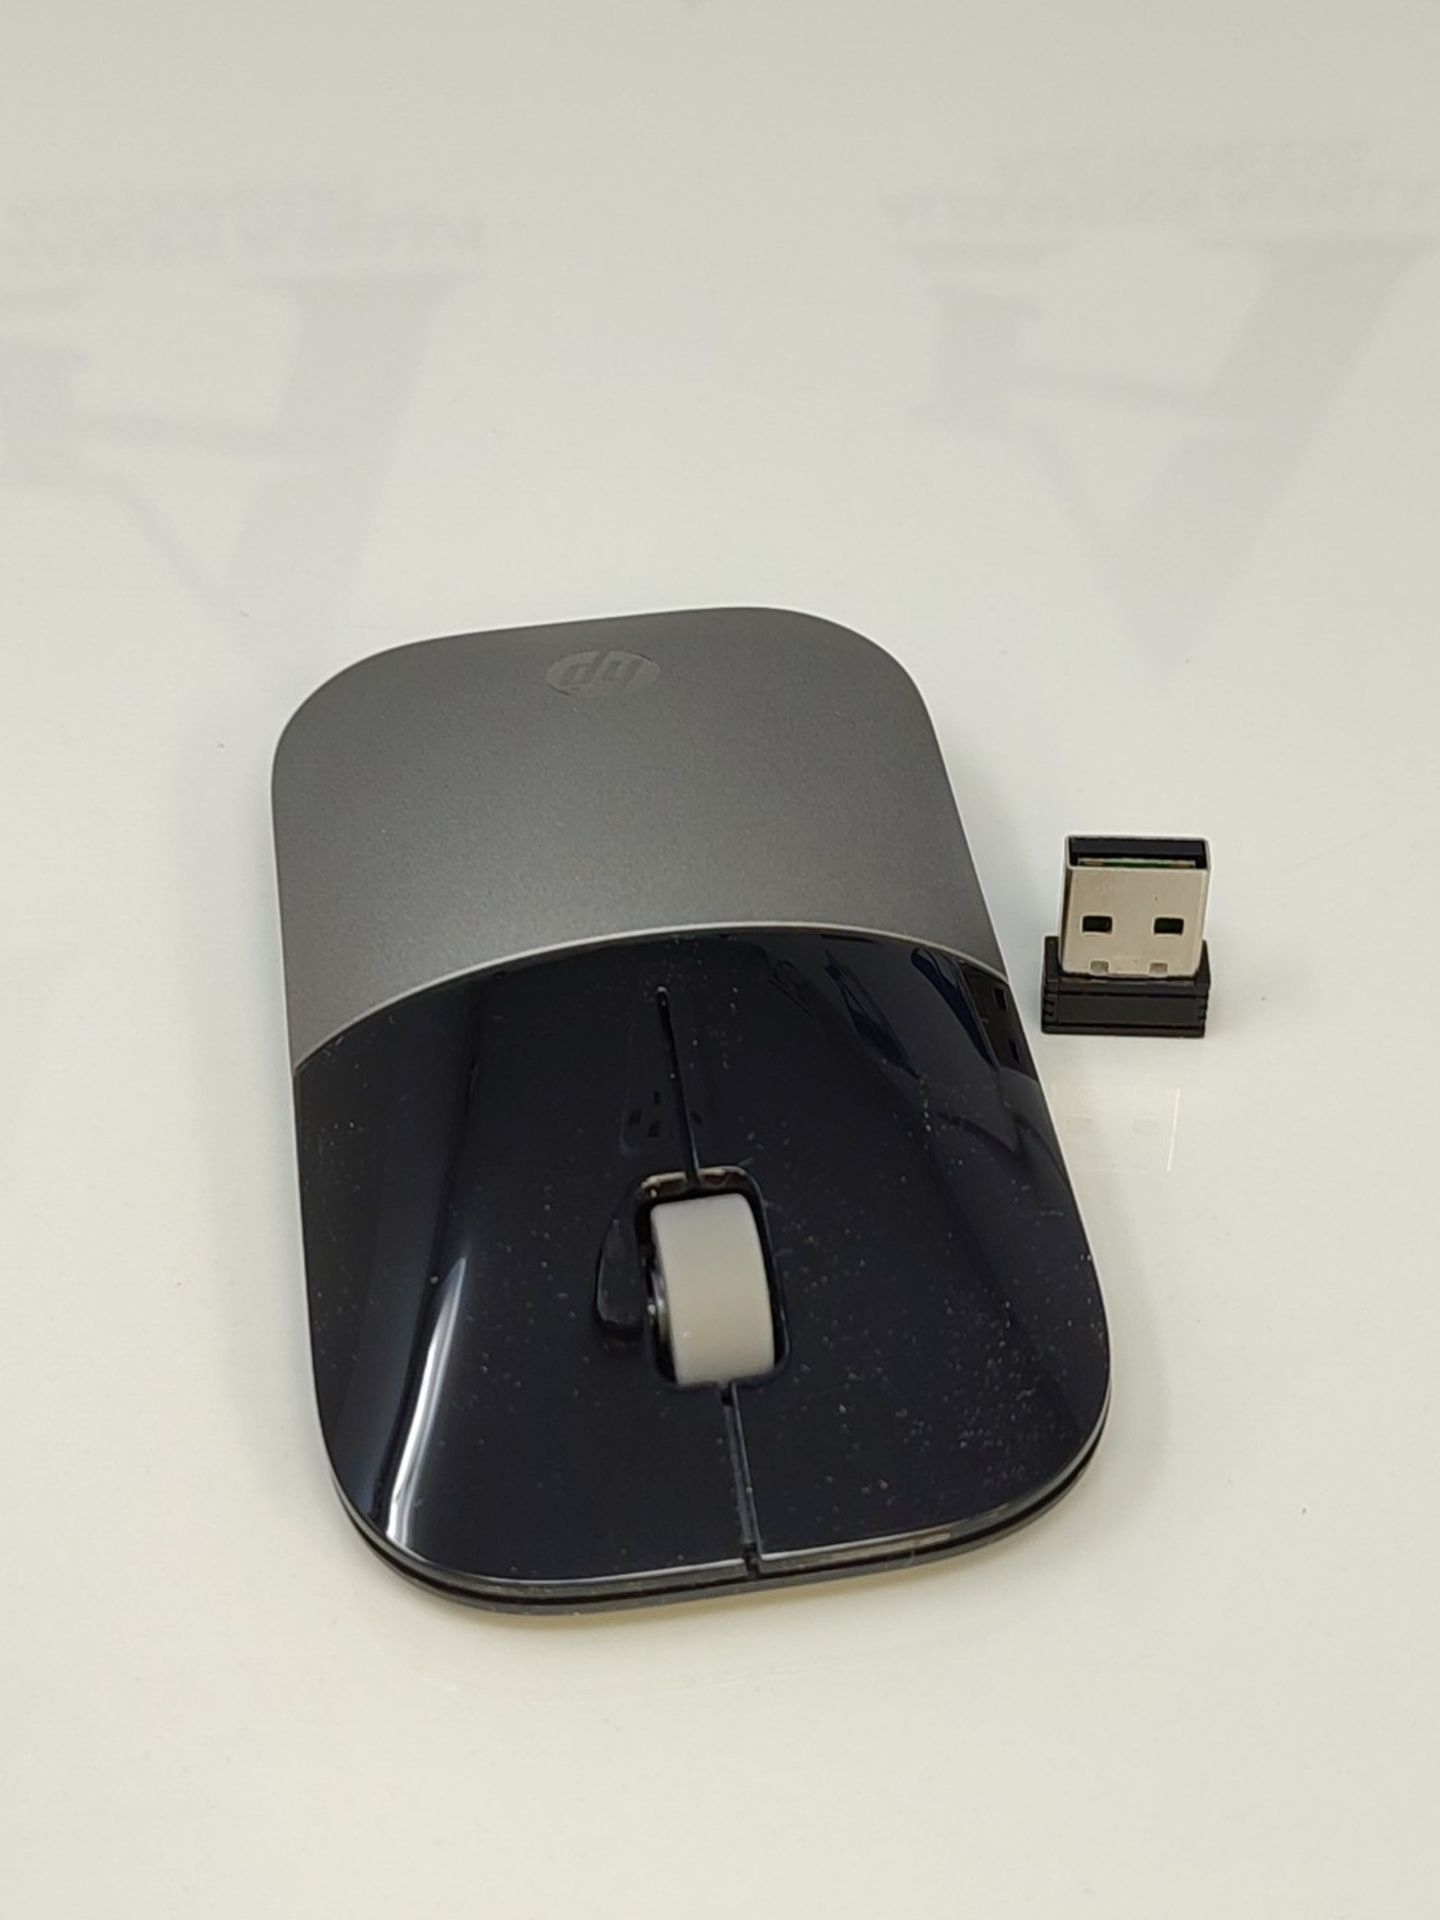 HP Z3700 Wireless Mouse, Precise Sensor, Blue LED Technology, 1200 DPI, 3 Buttons, Scr - Image 3 of 3